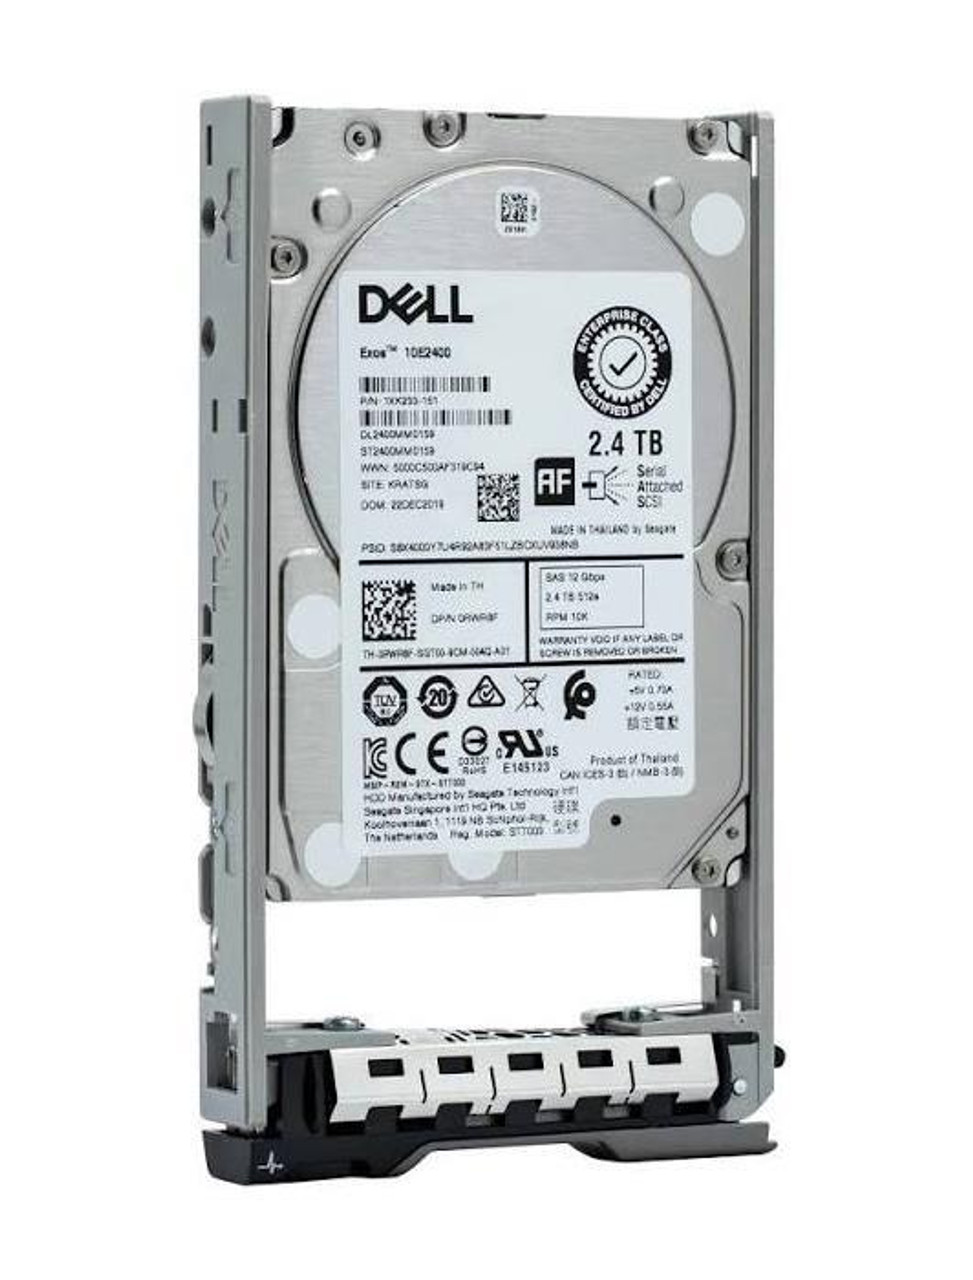 ST2400MMD159 Dell 2.4TB 10000RPM SAS 12Gbps Hot Swap 256MB Cache (512e) 2.5-inch Internal Hard Drive